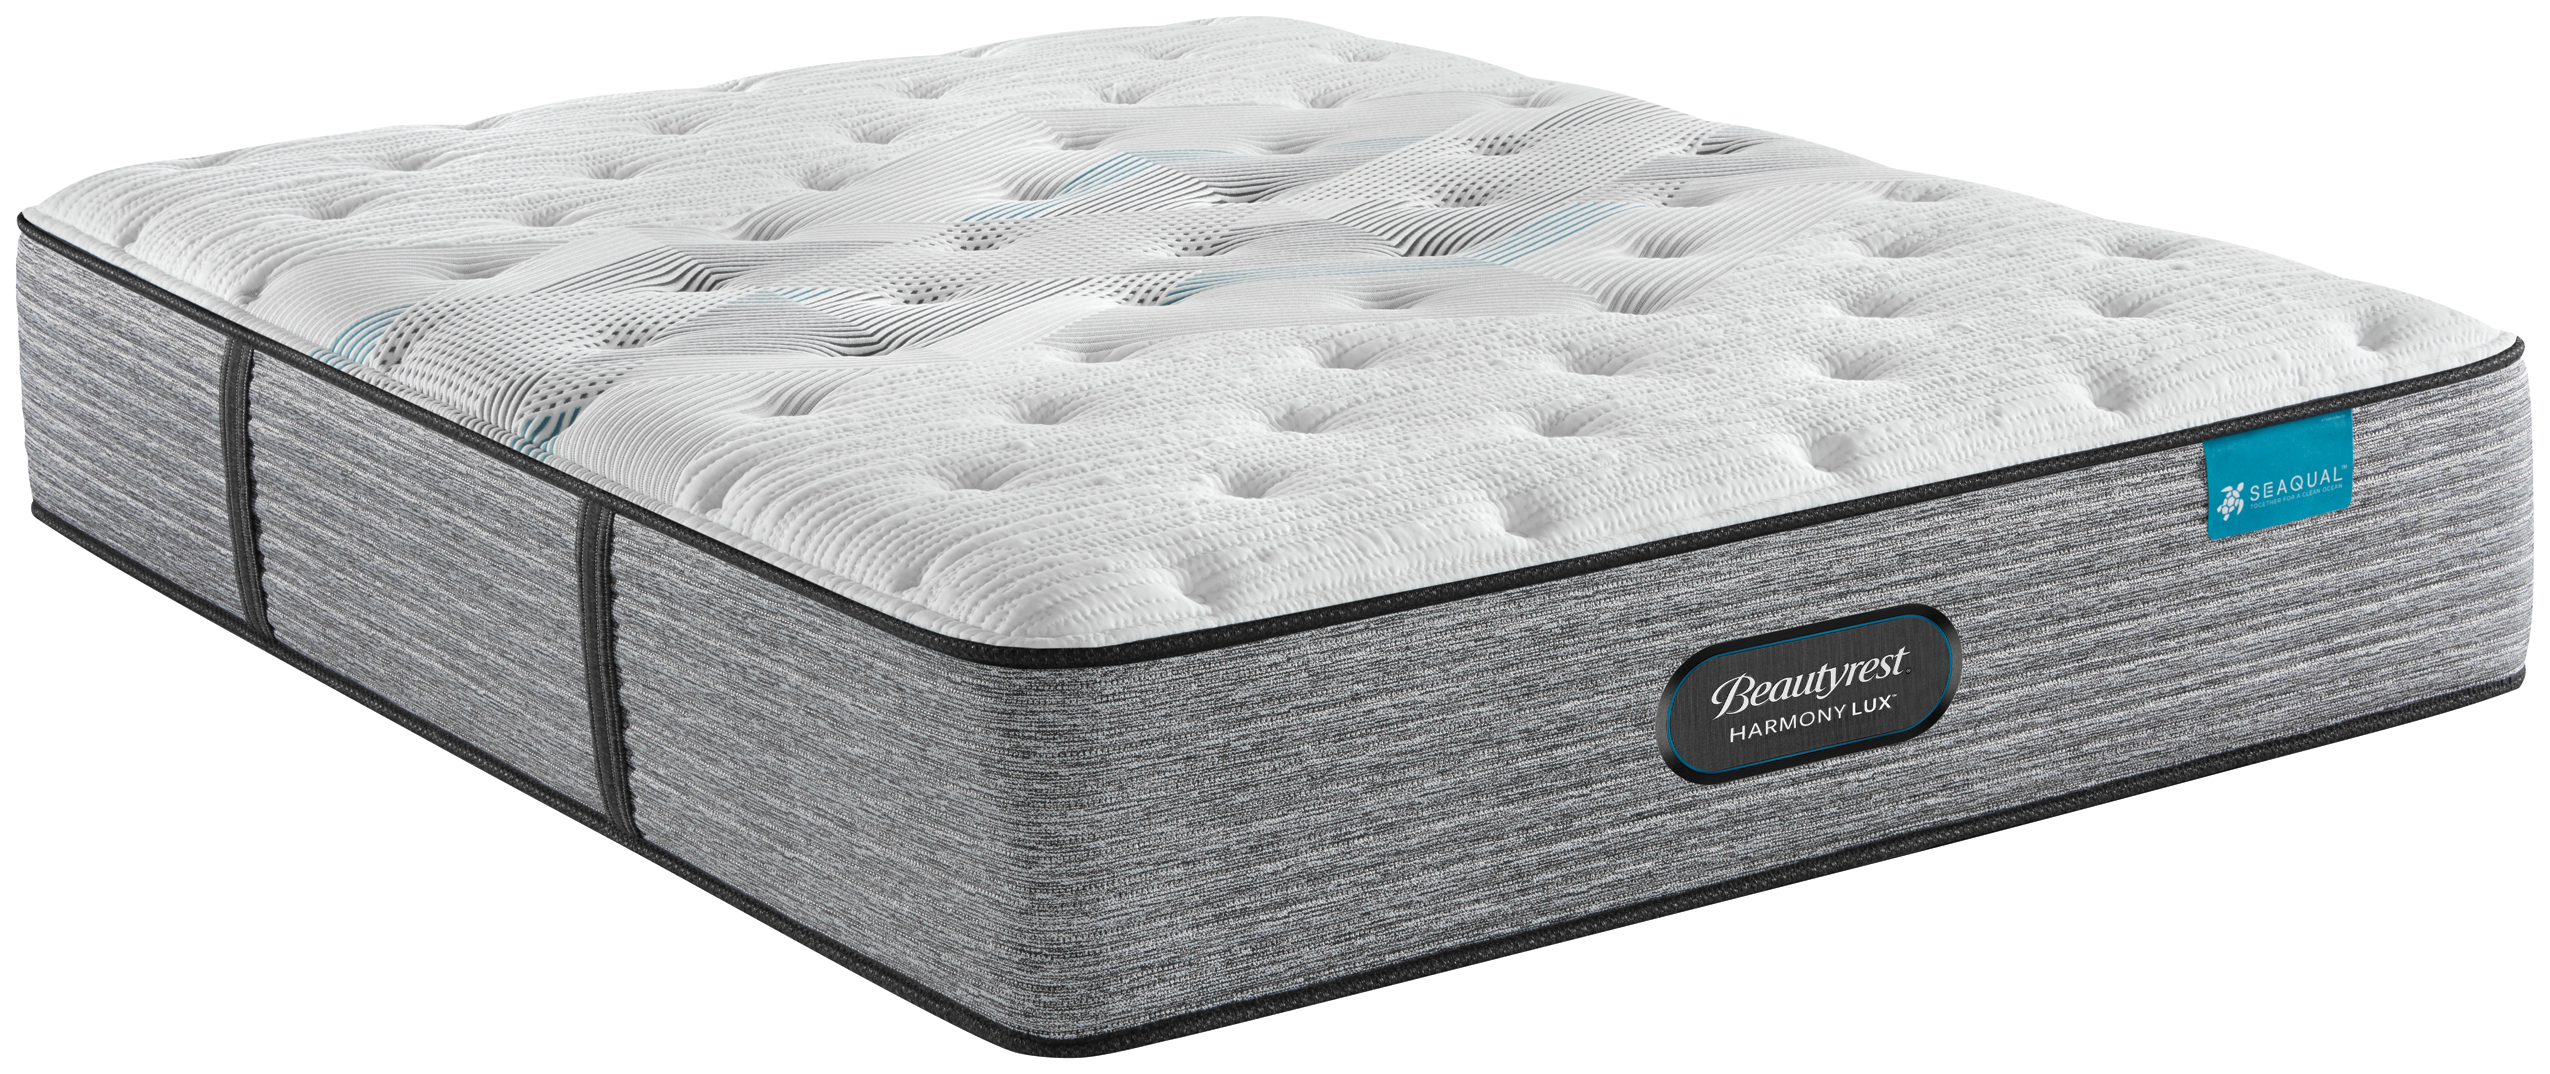 beautyrest harmony lux extra firm queen mattress